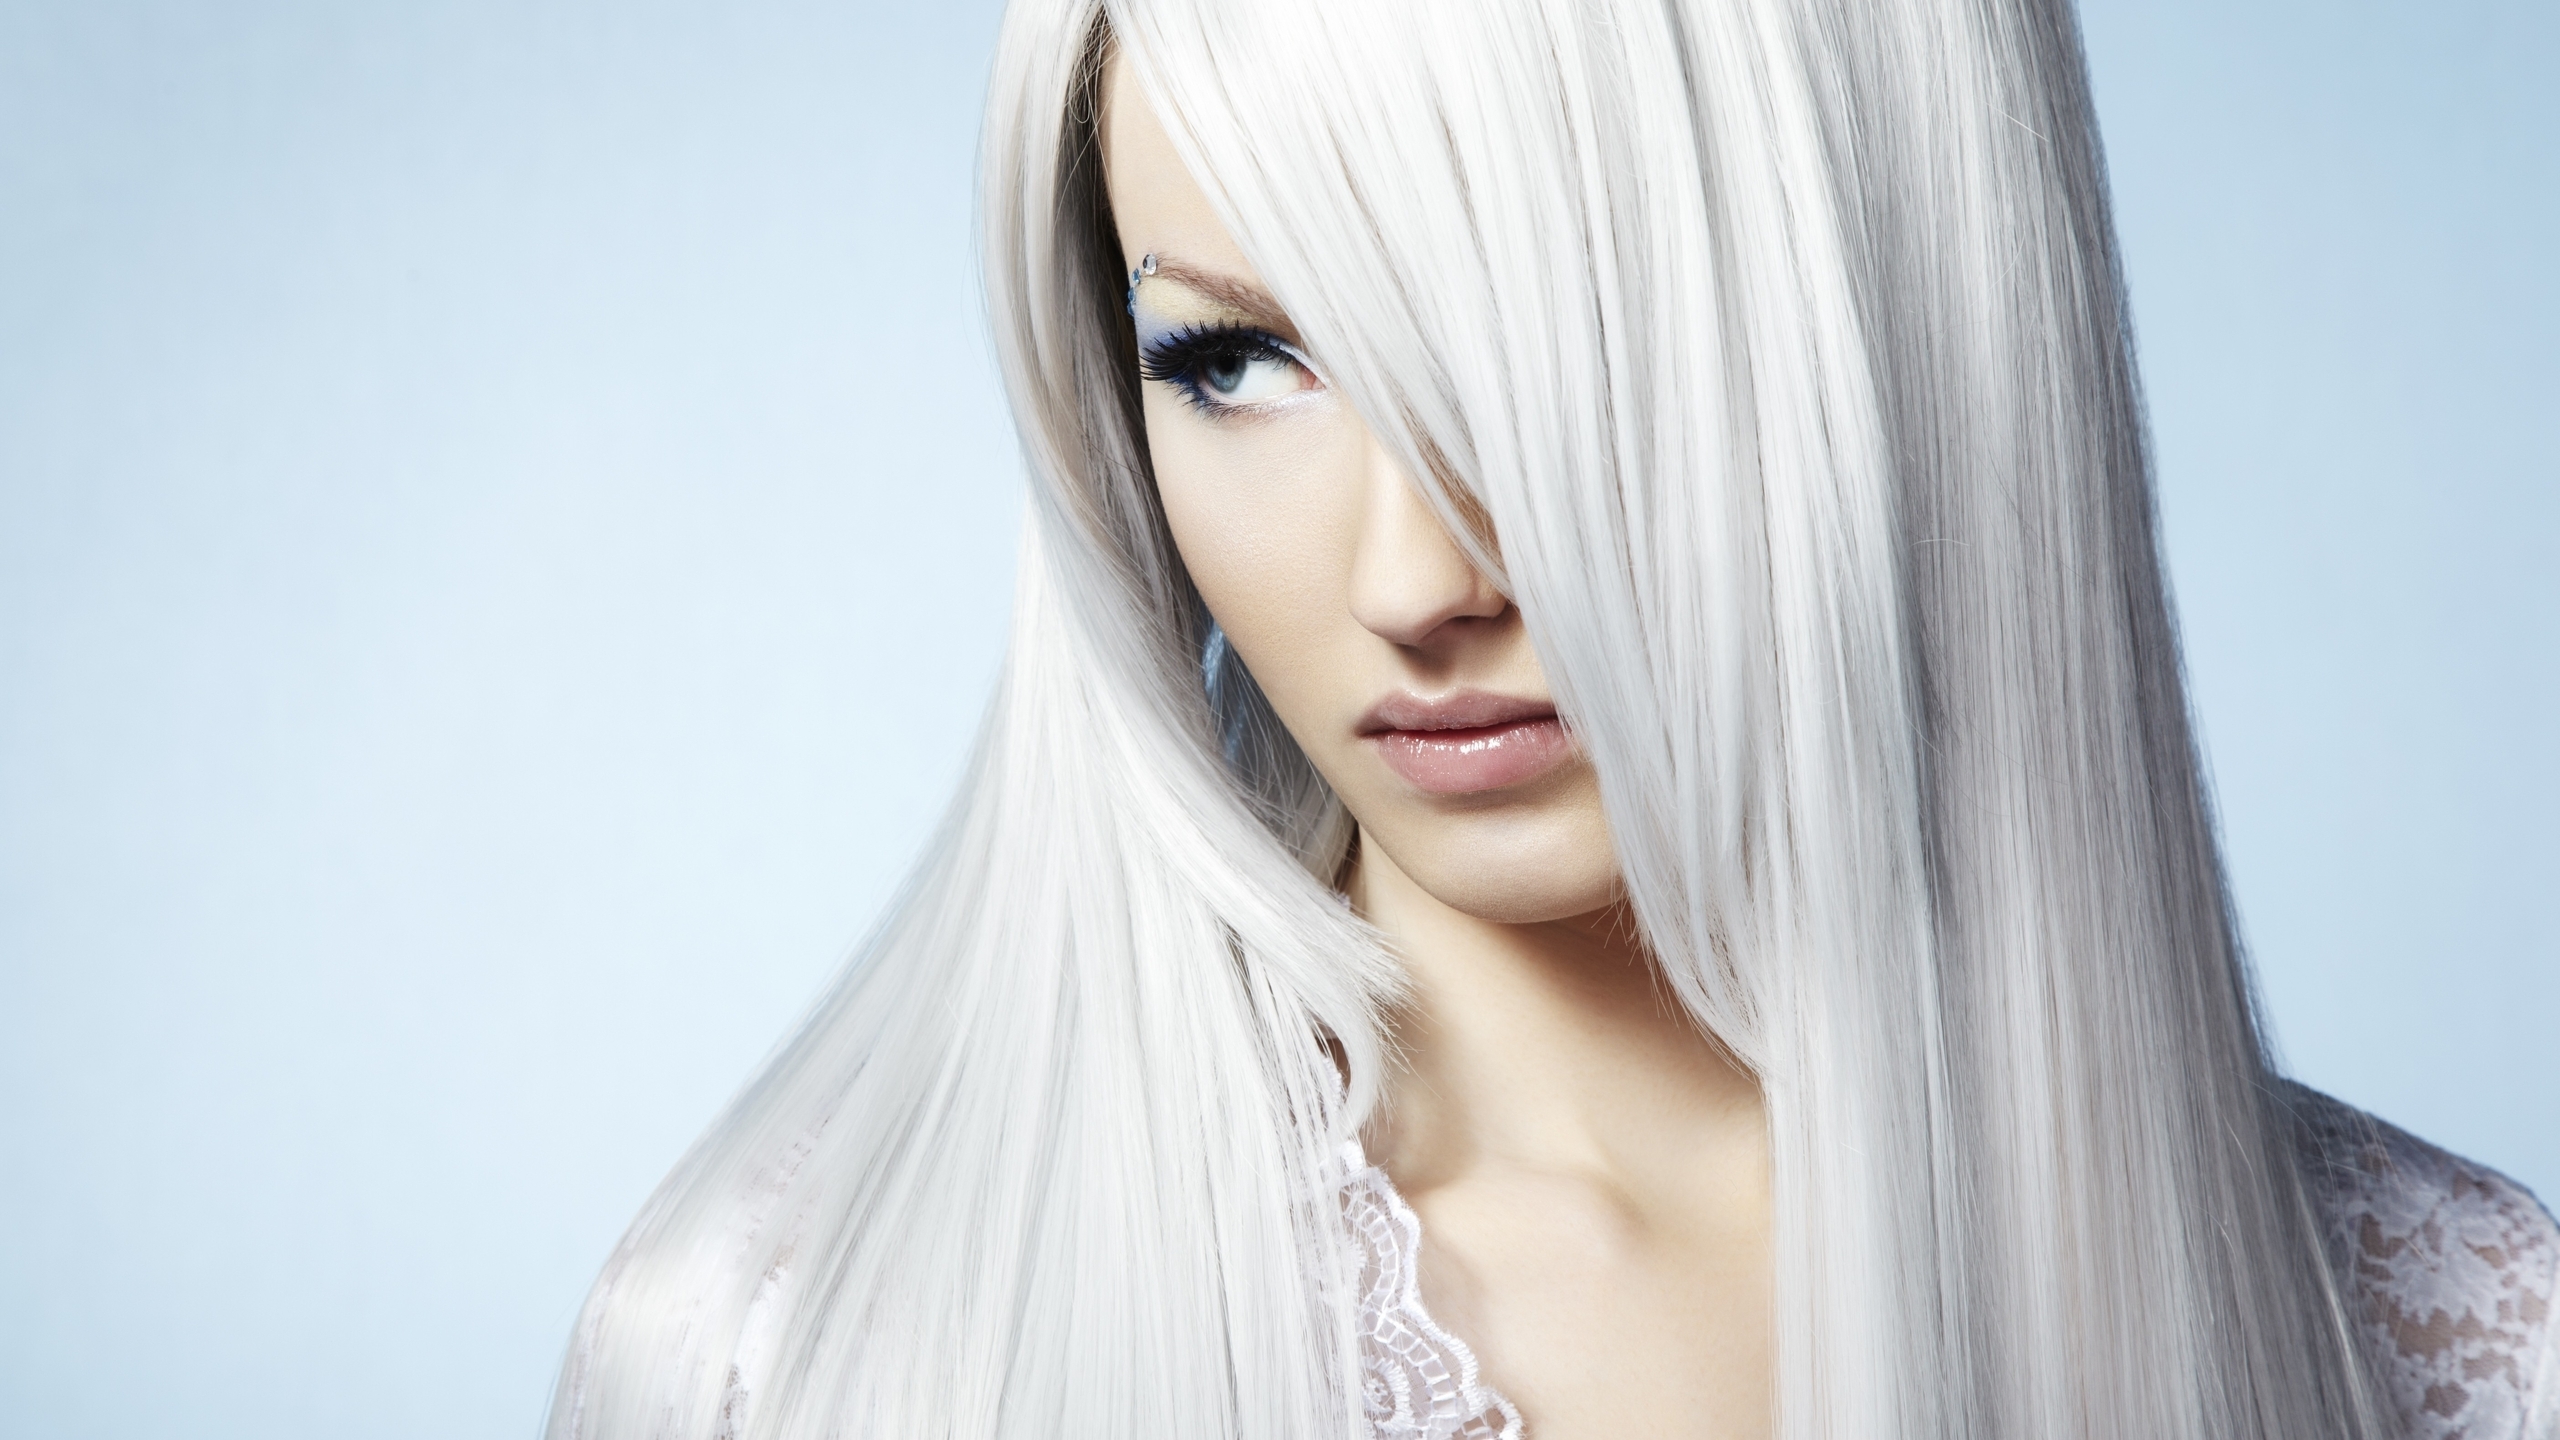 фото голая девочка с белыми волосами фото 13